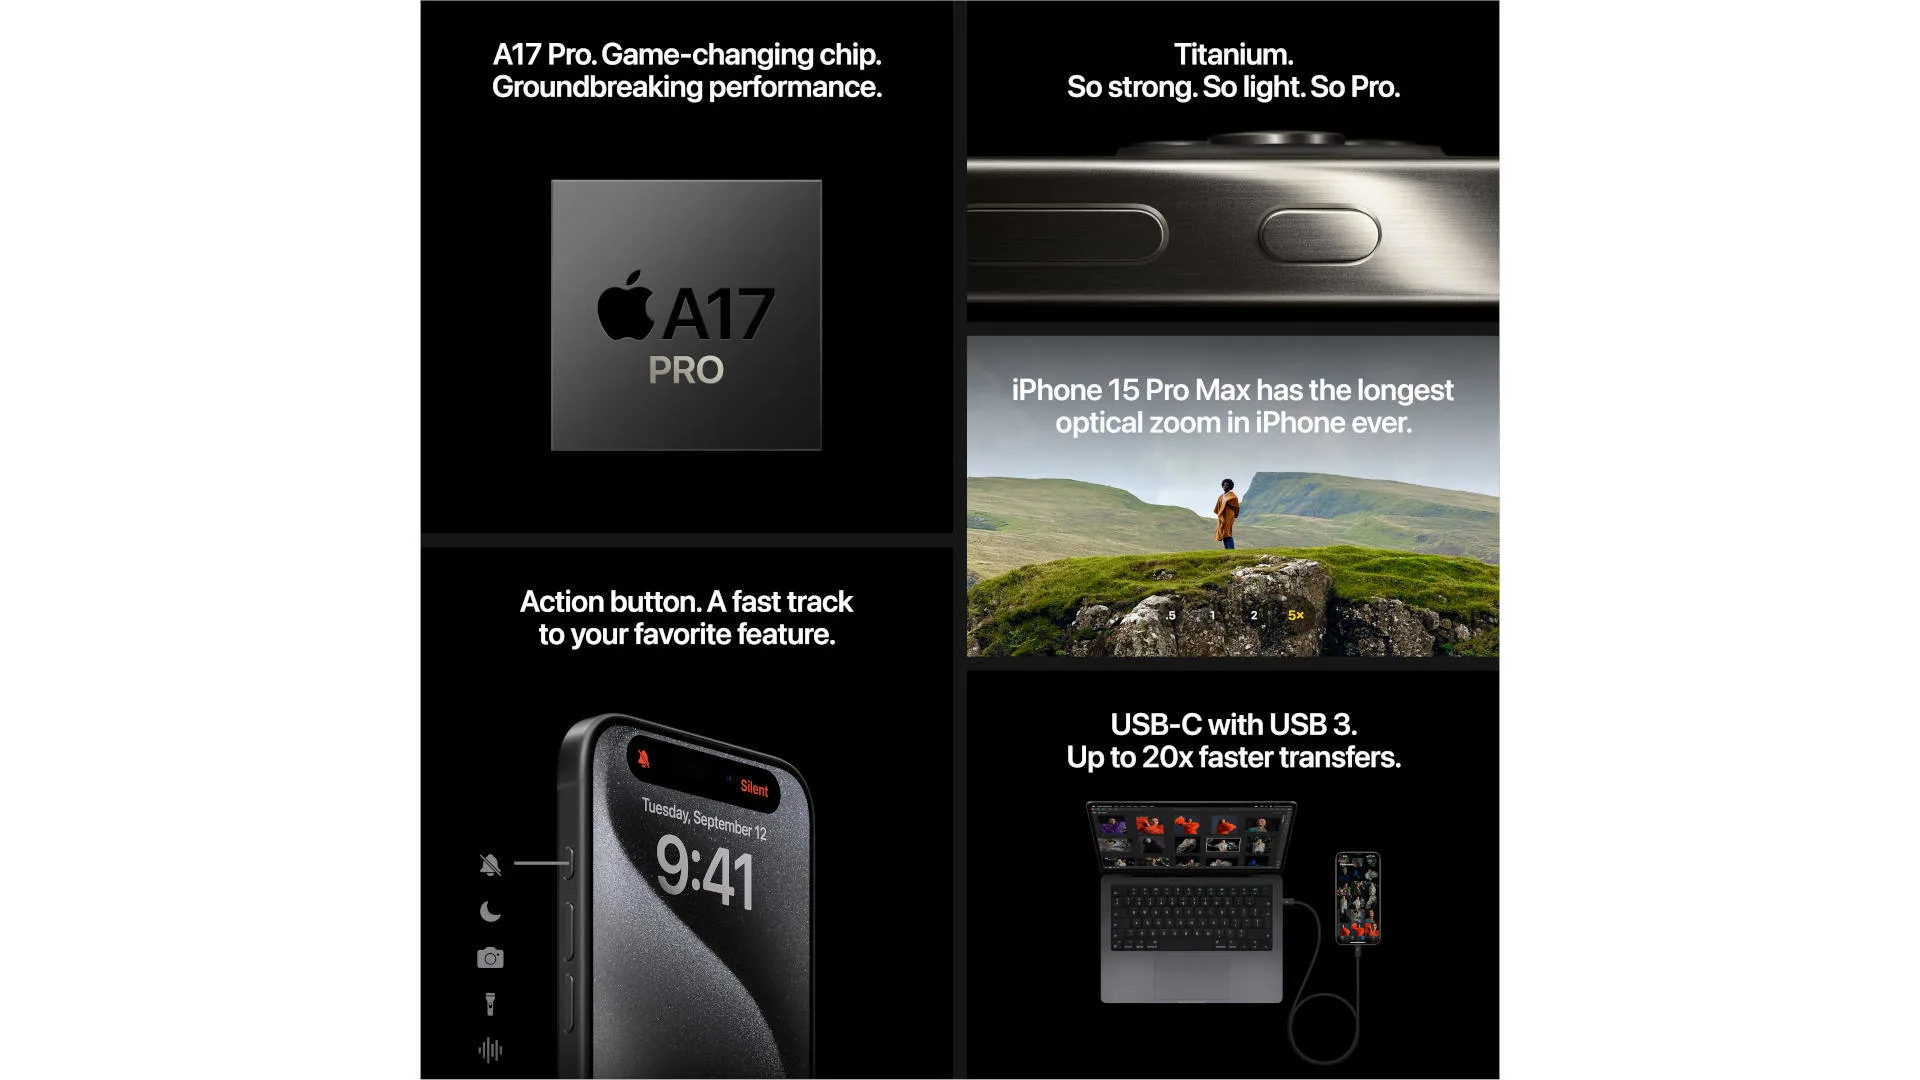 APPLE iPhone 15 Pro